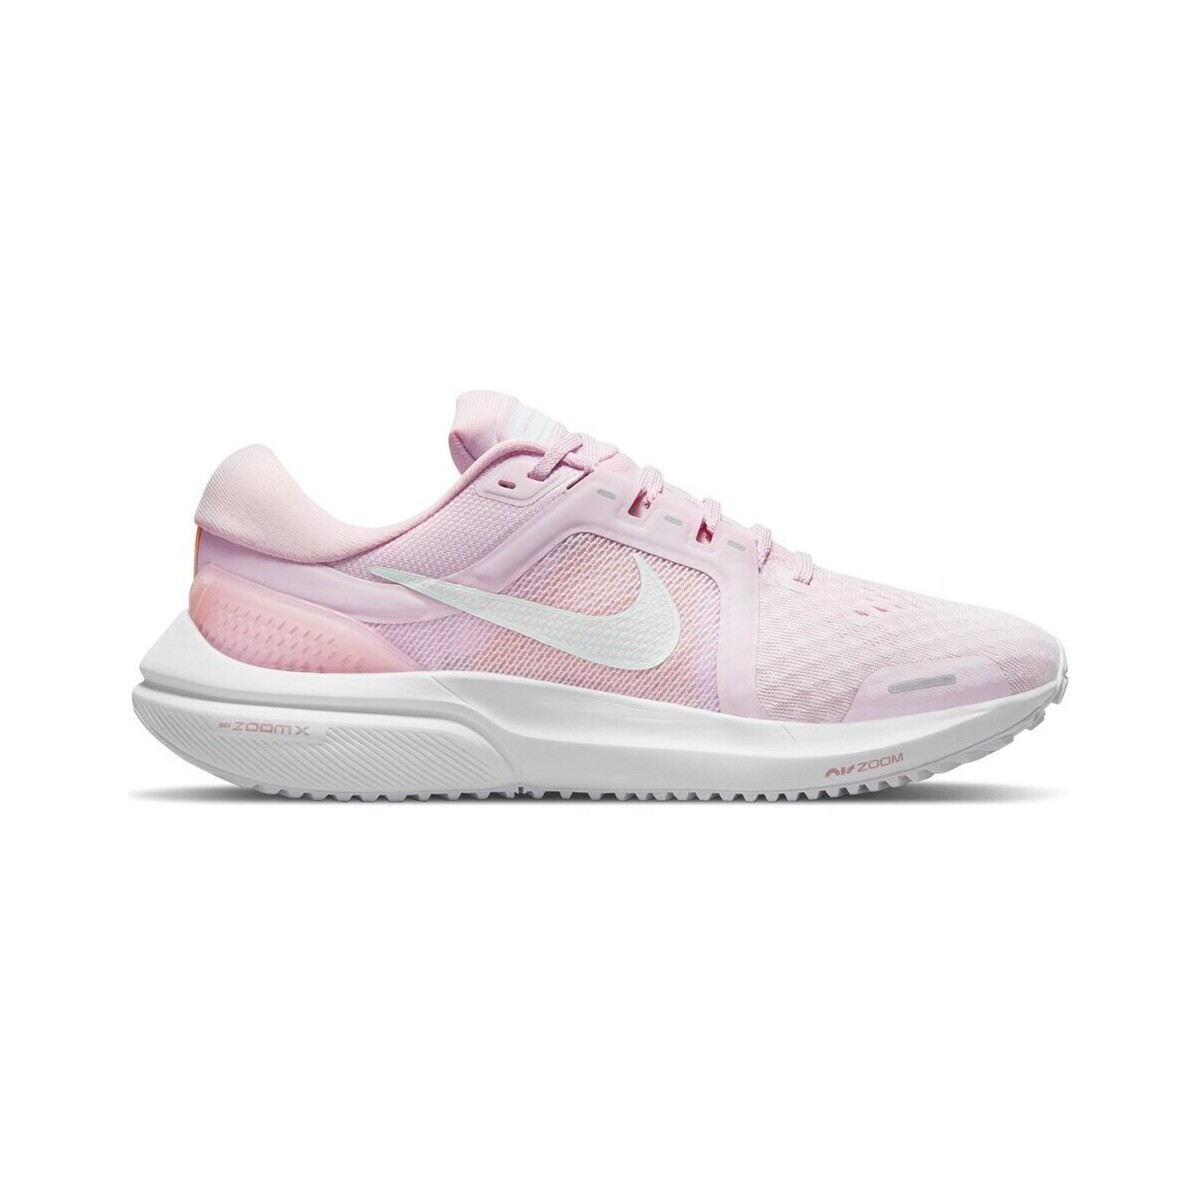 kengät Naiset Juoksukengät / Trail-kengät Nike Air Zoom Vomero 16 Vaaleanpunainen